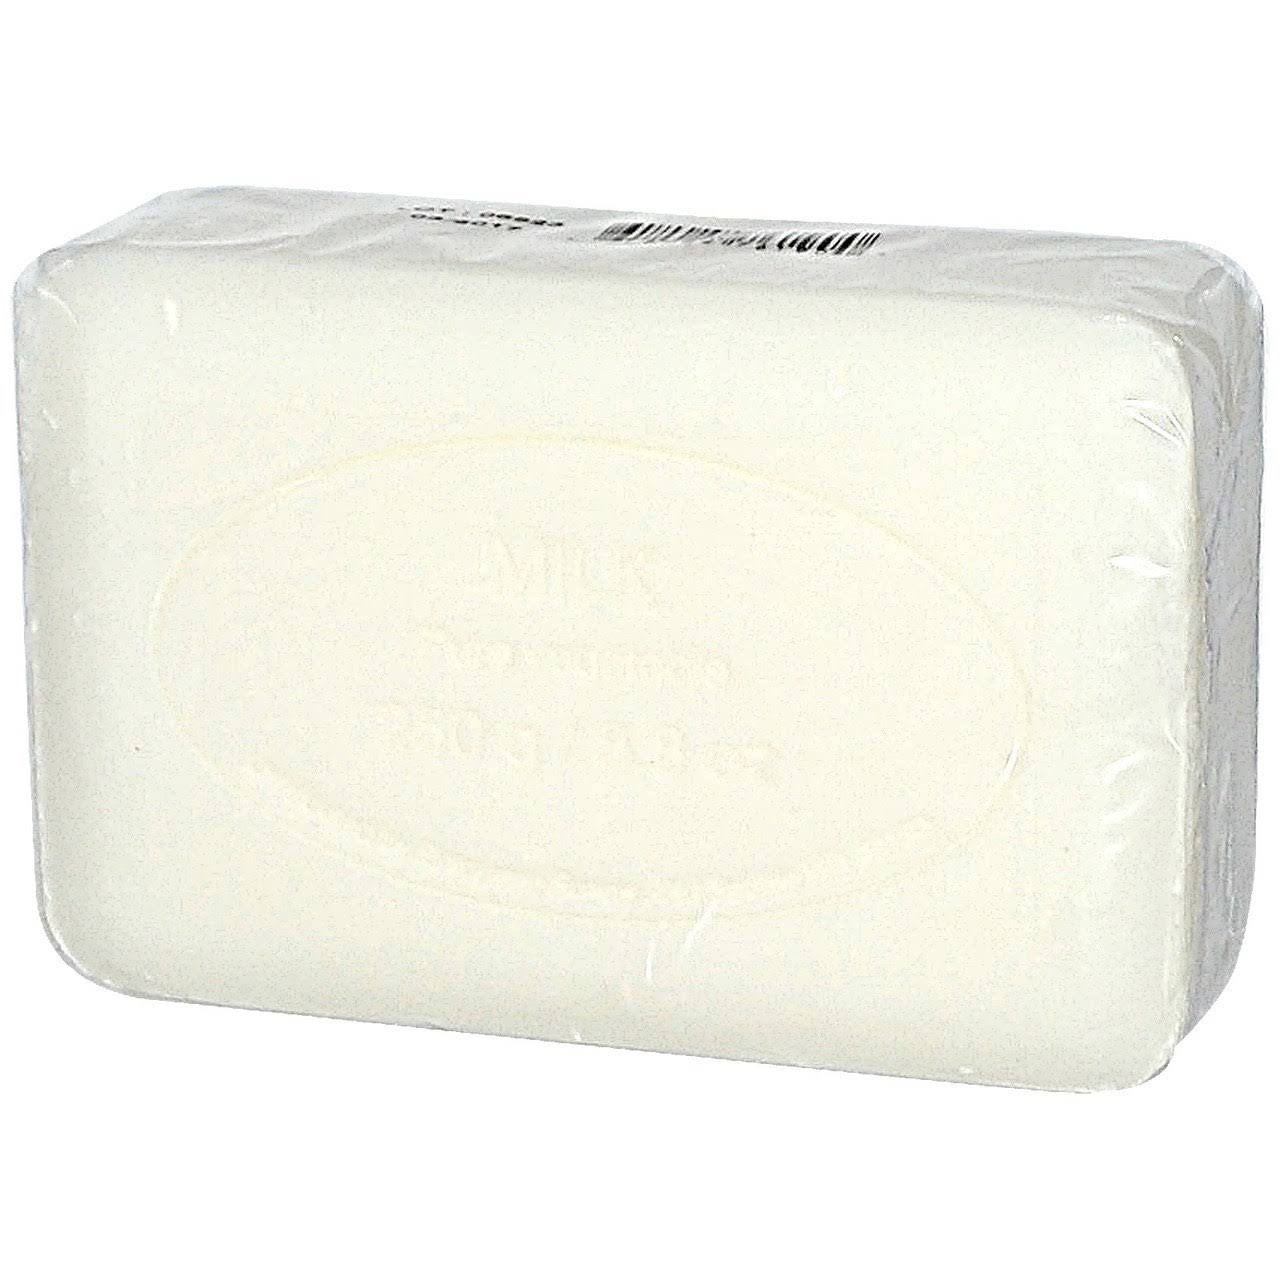 PdP Milk Soap 250g